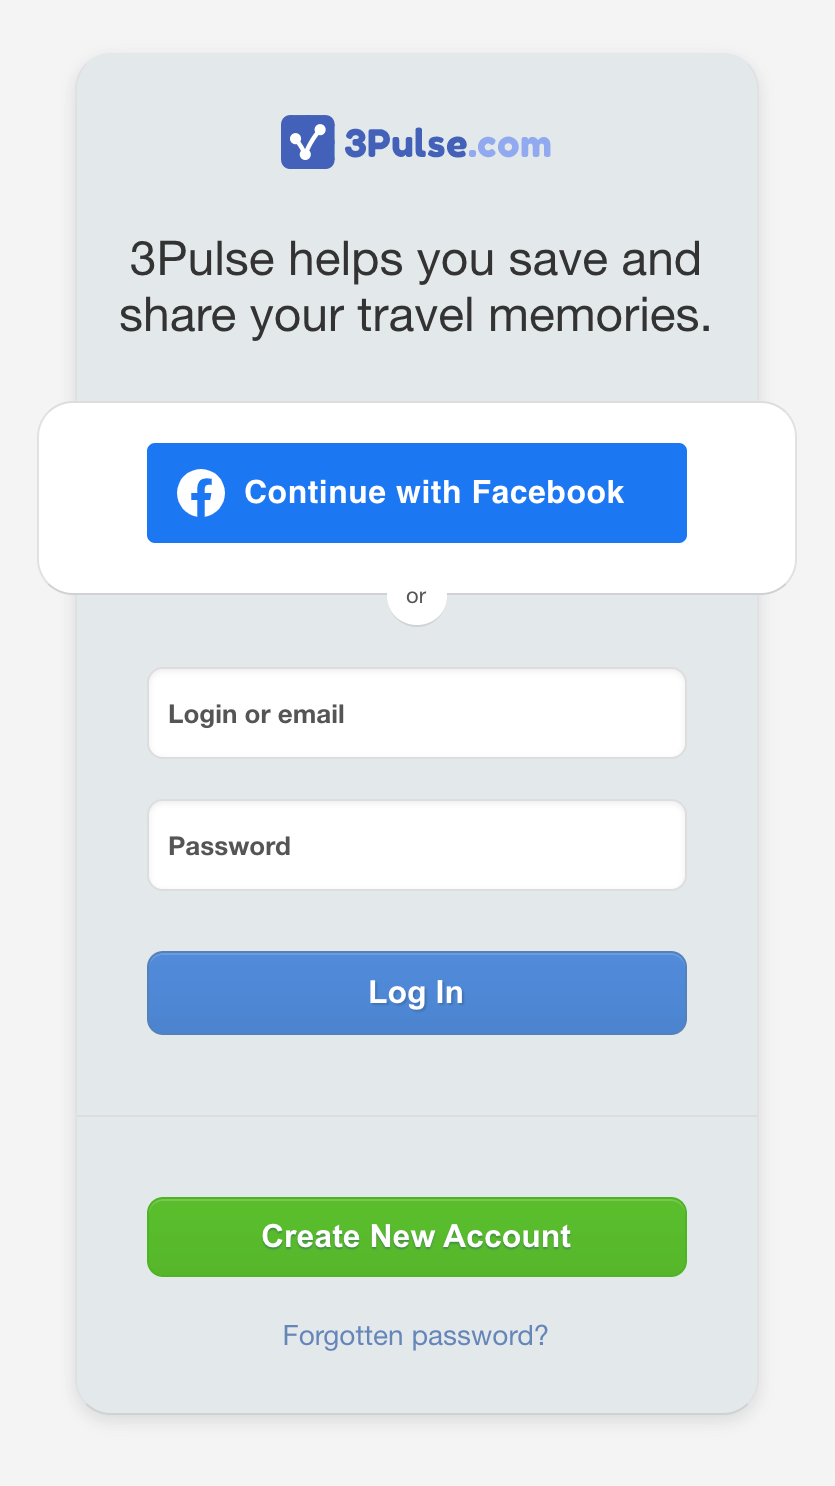 Www facebook login and password